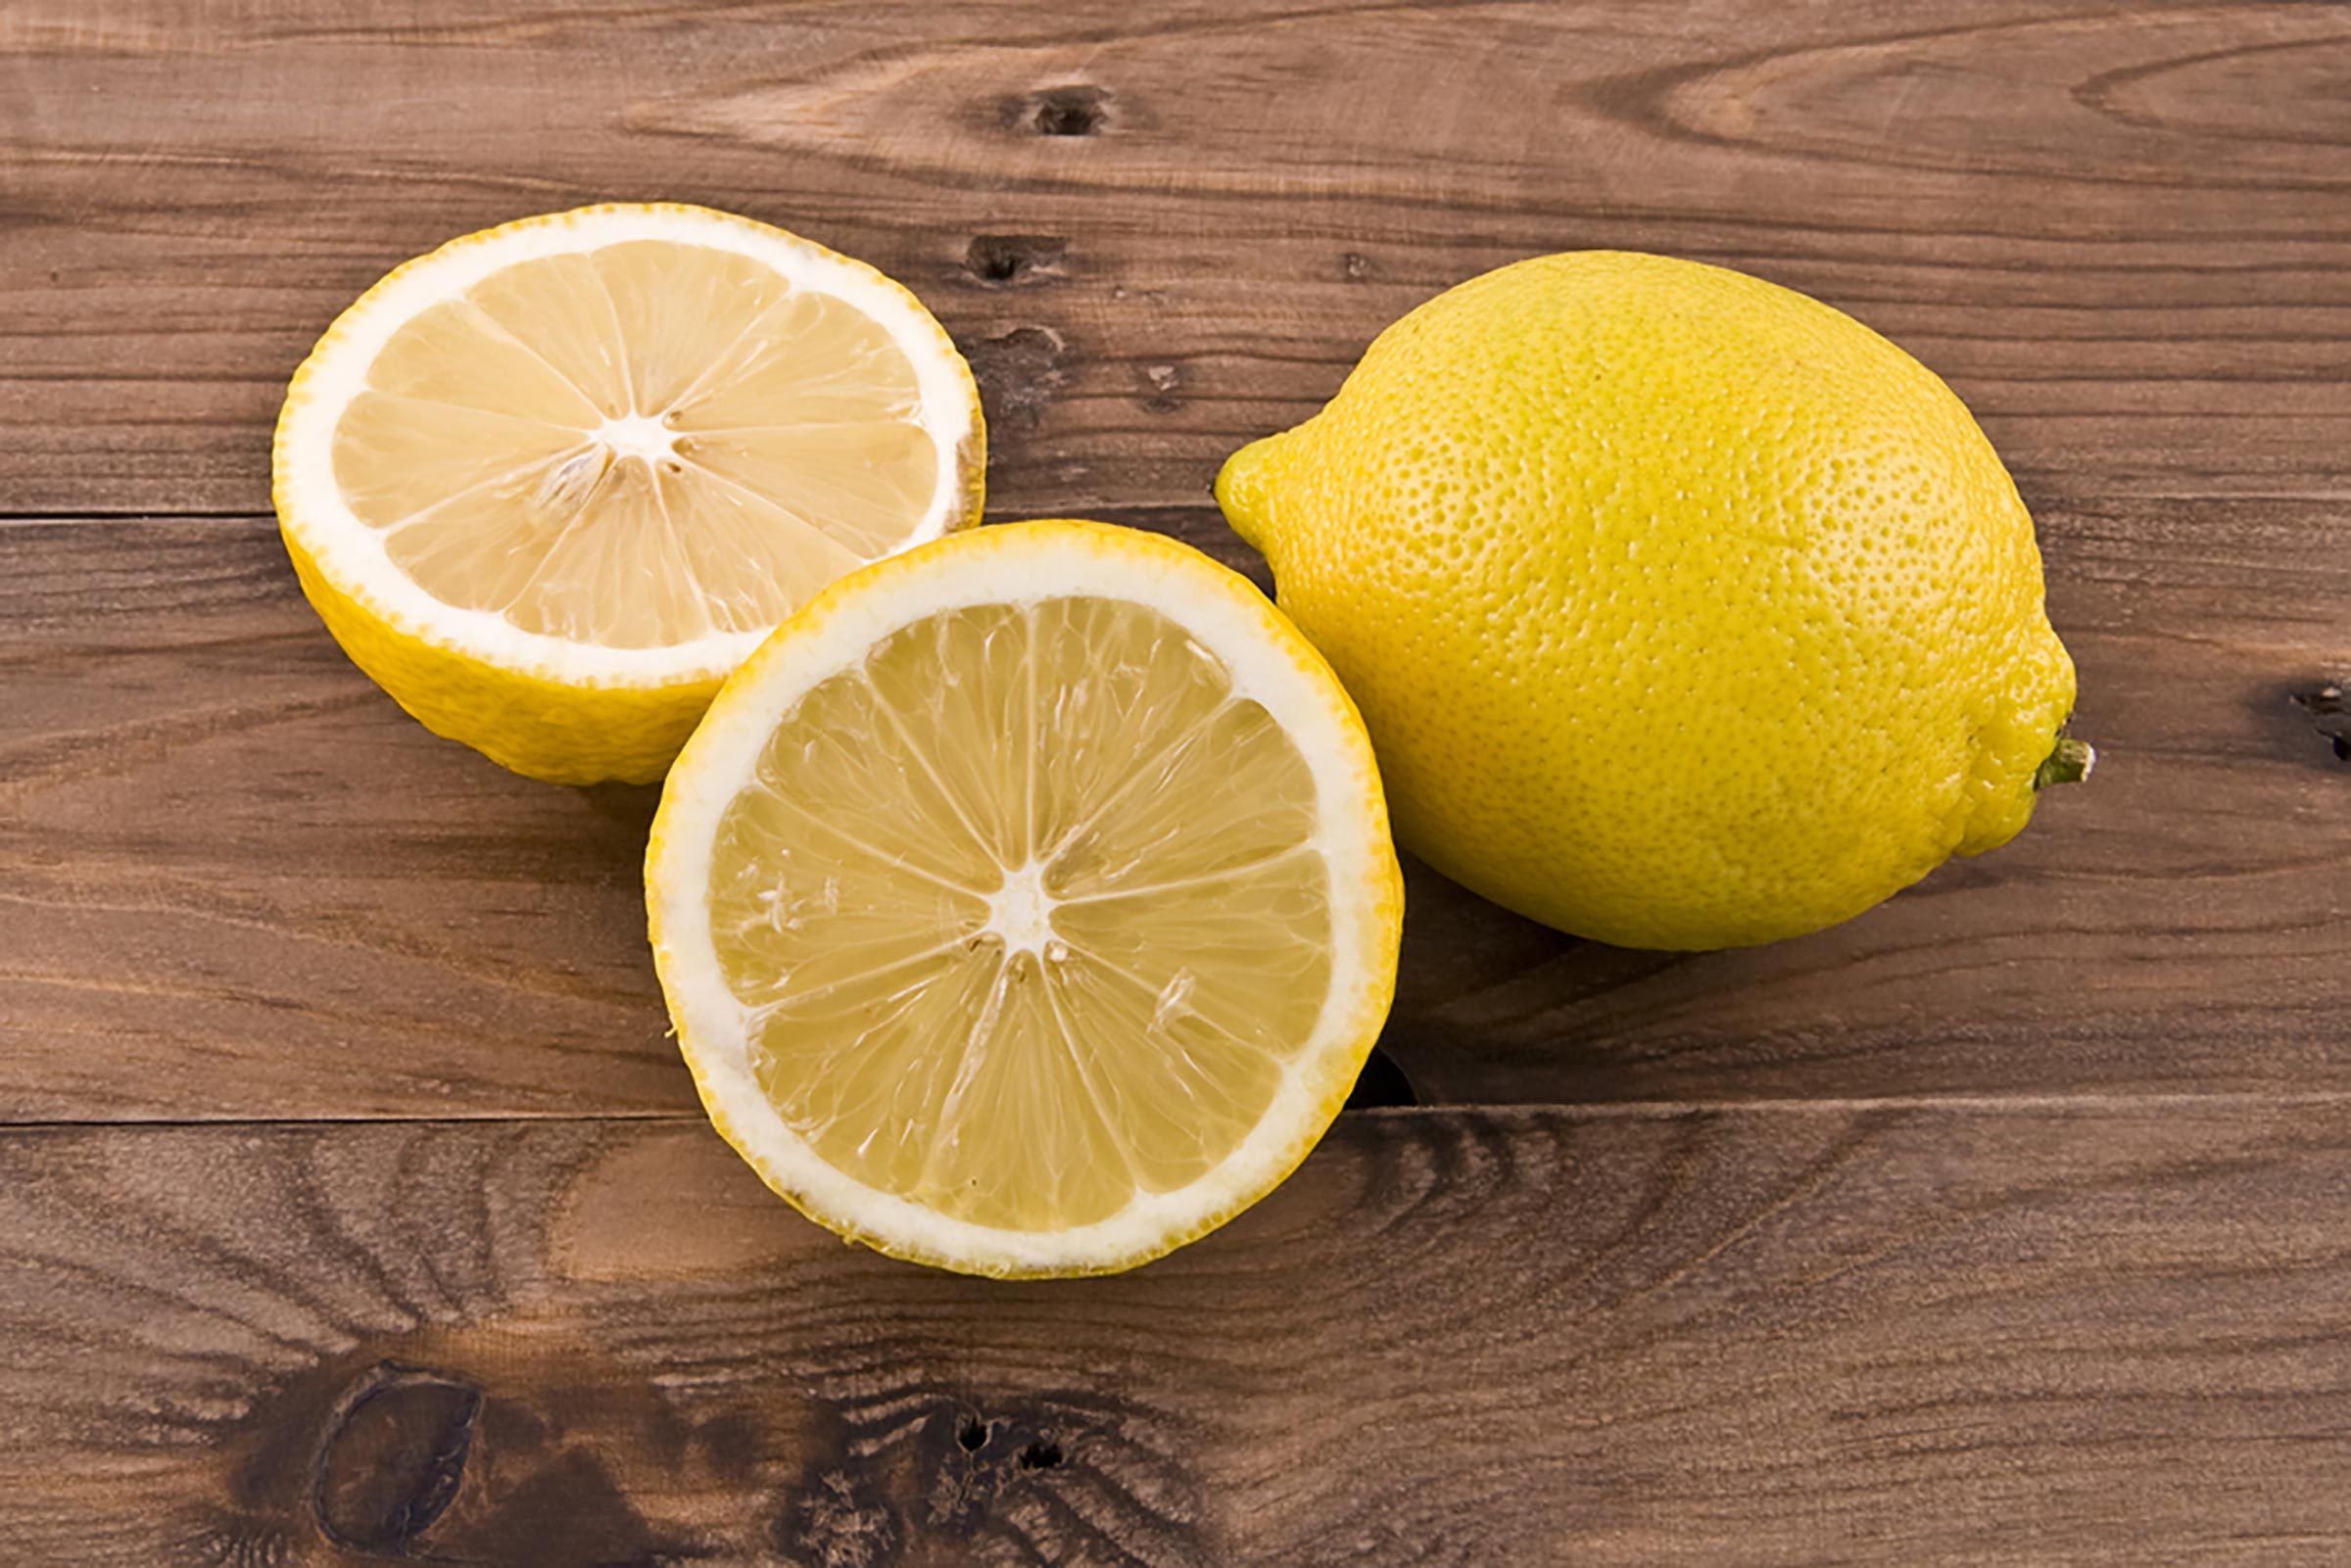 Dandruff treatment with lemon